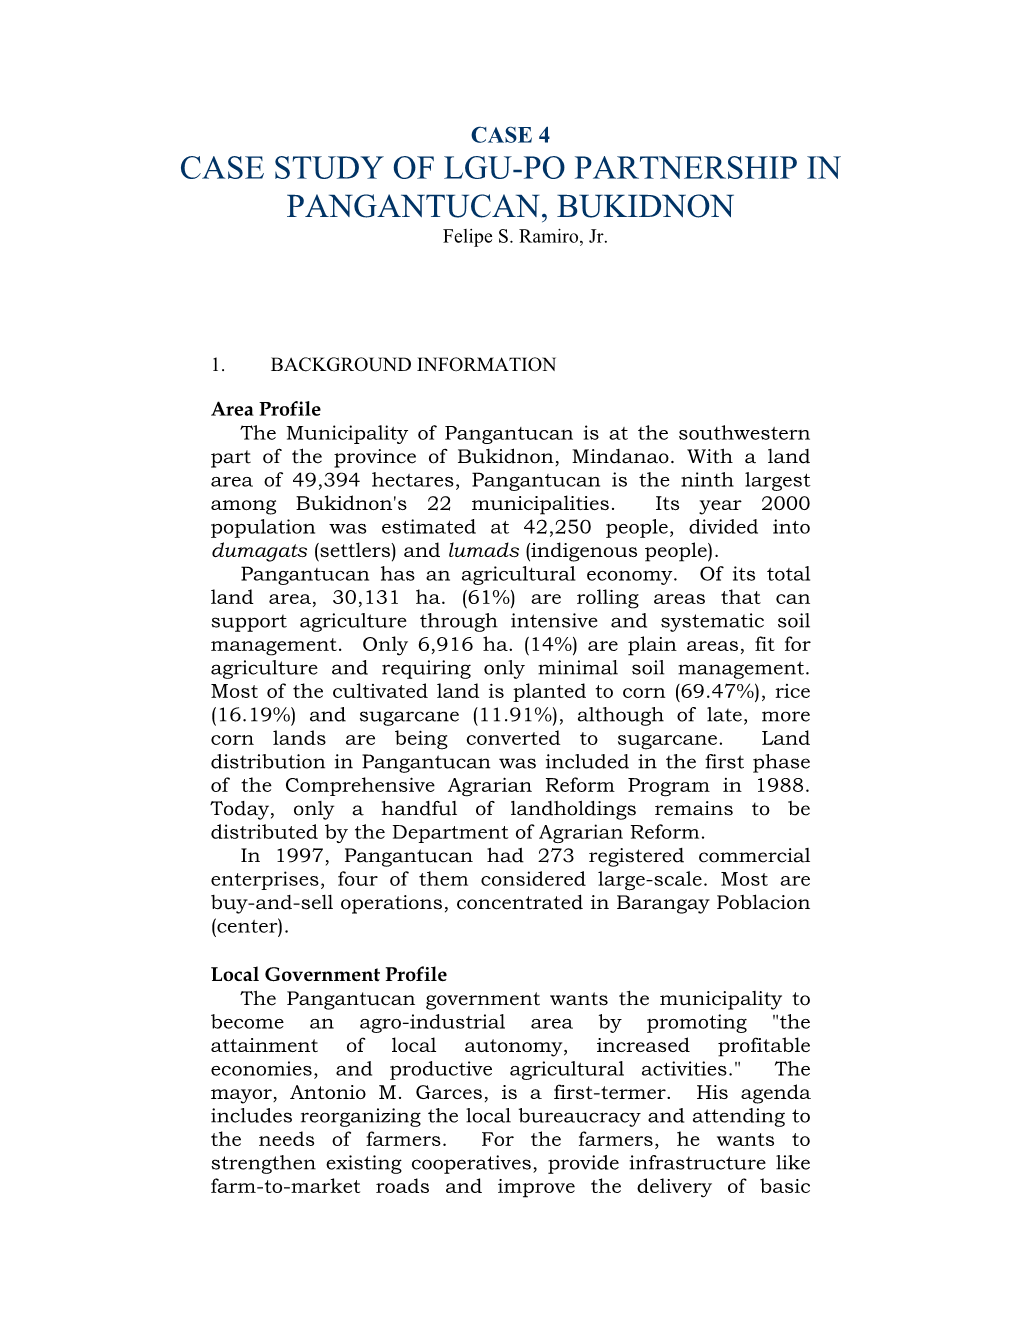 CASE STUDY of LGU-PO PARTNERSHIP in PANGANTUCAN, BUKIDNON Felipe S